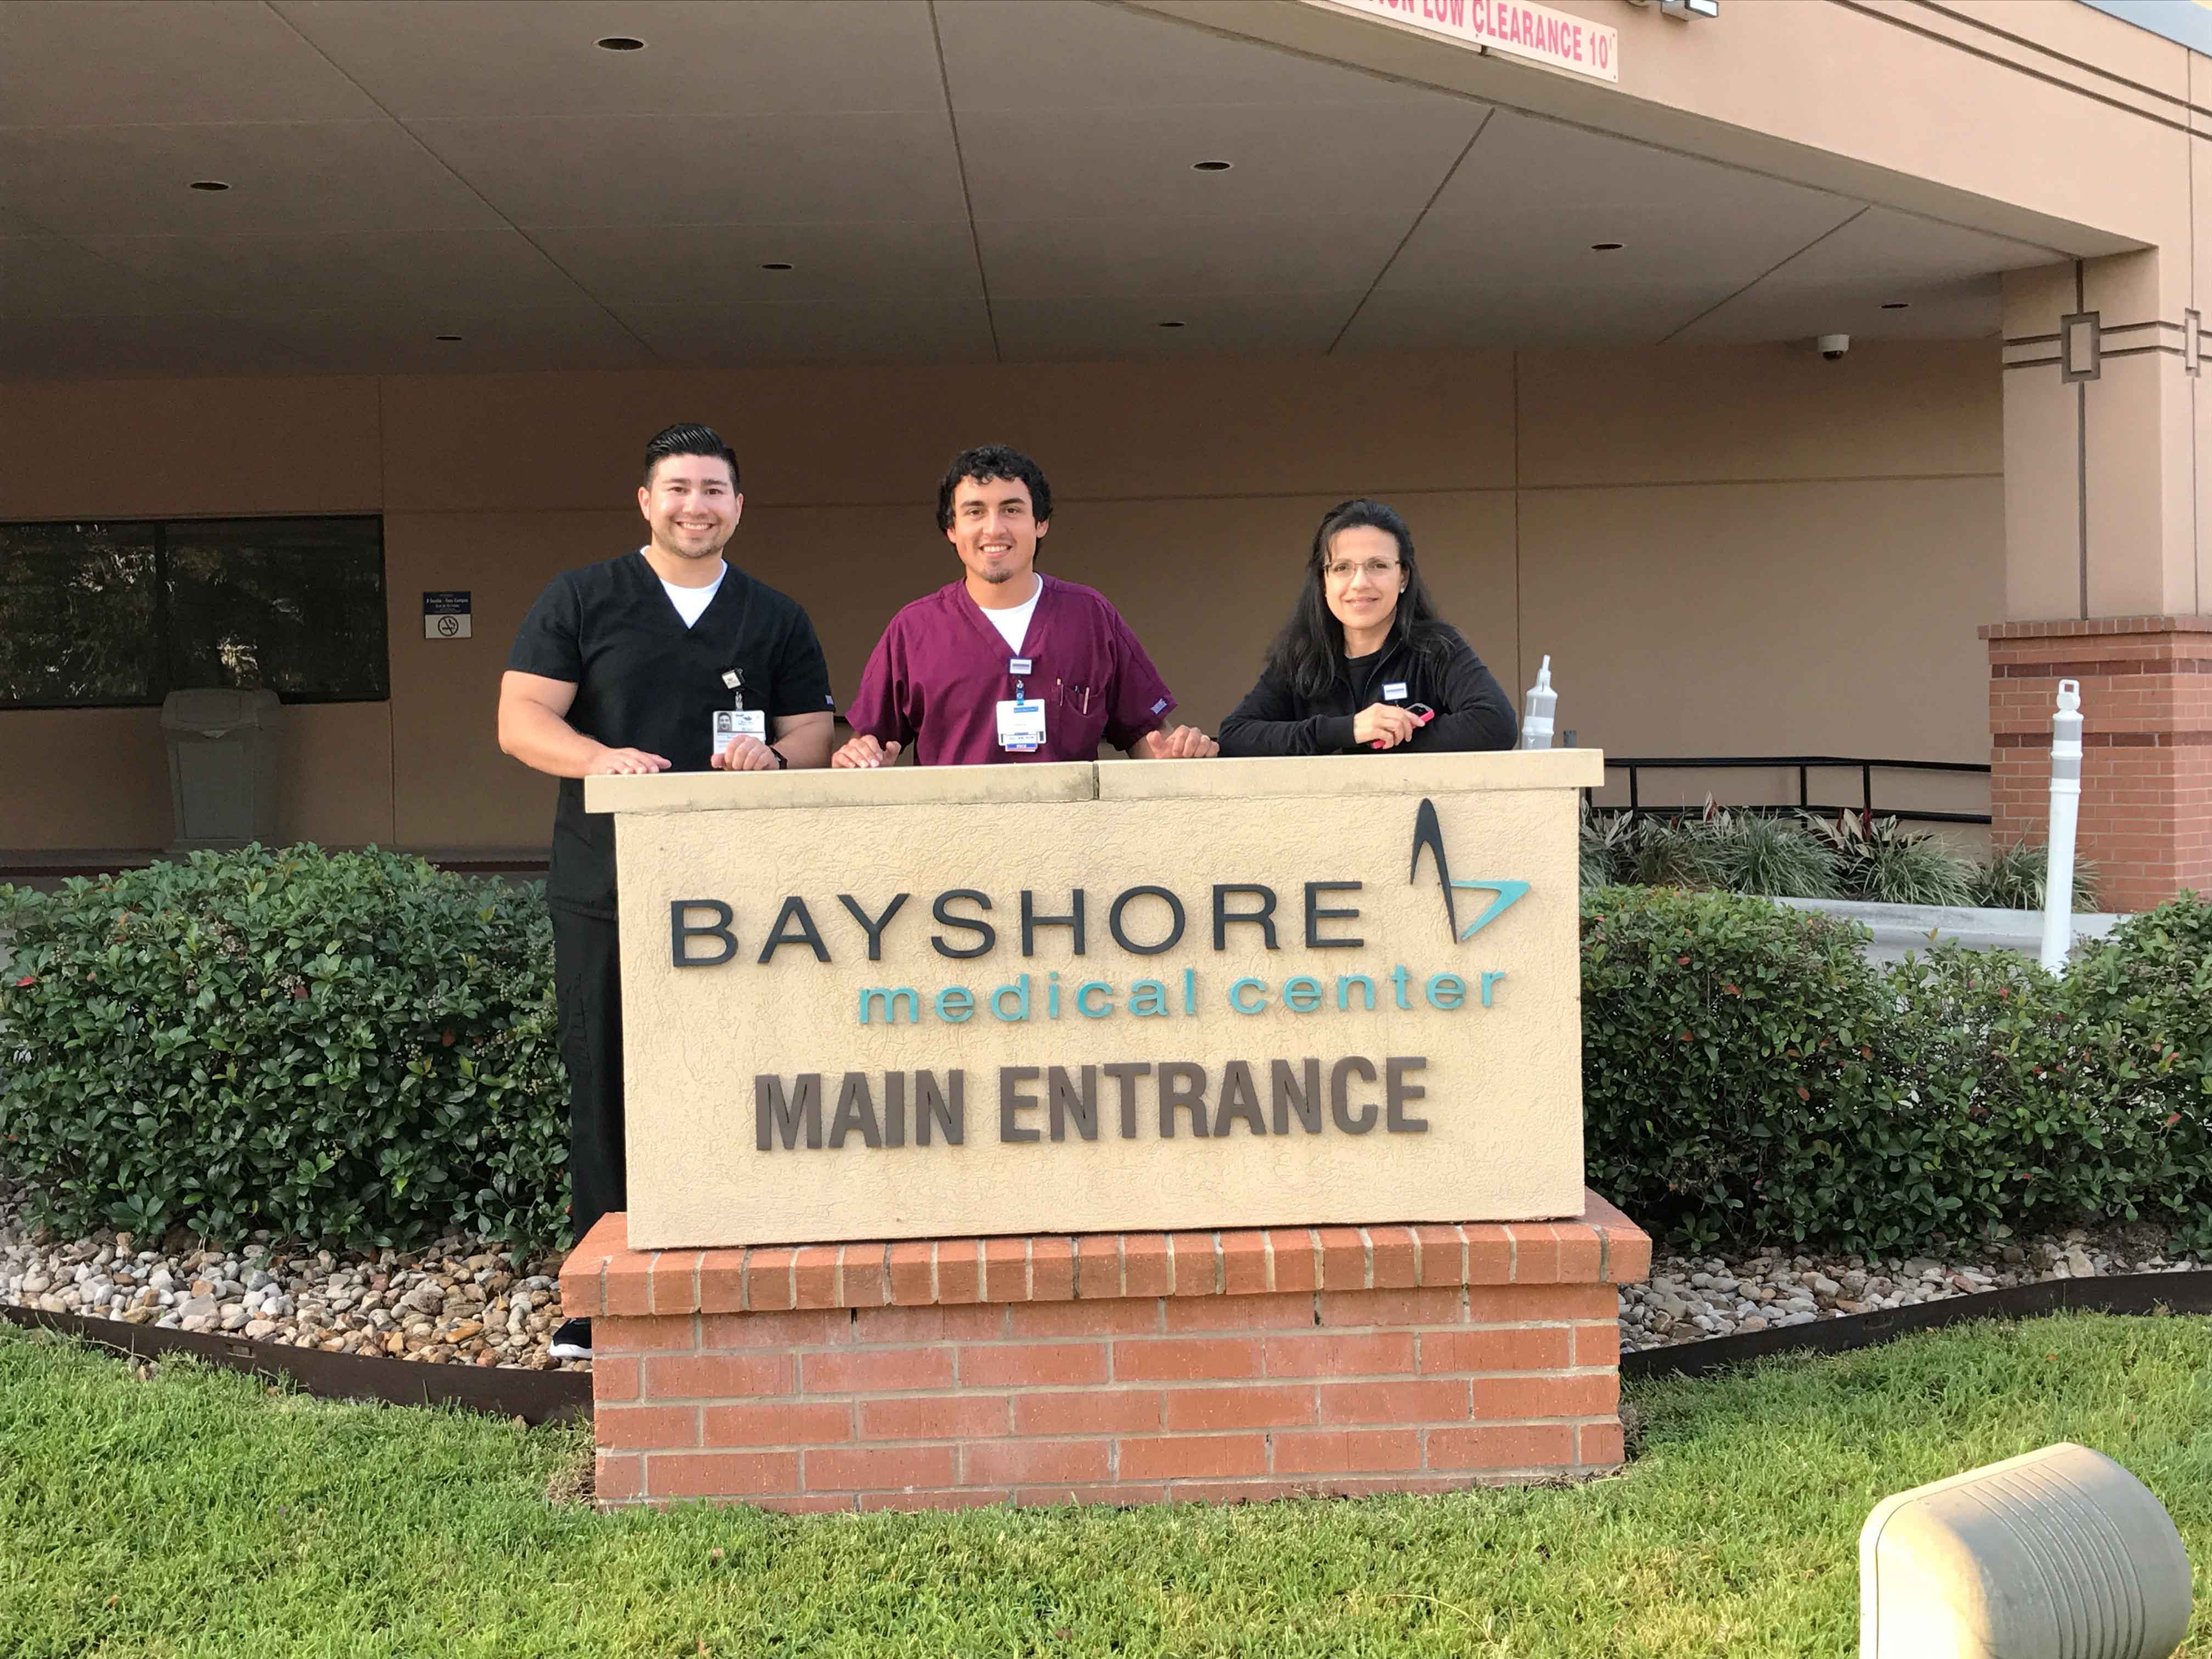 Three hospital caregivers standing behind Bayshore Medical Center's Main Entrance sign